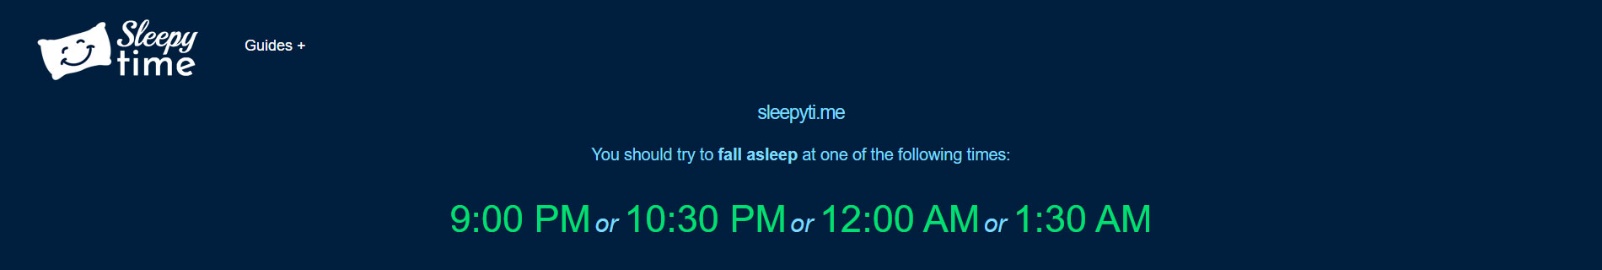 Screenshot of the SleepyTime website